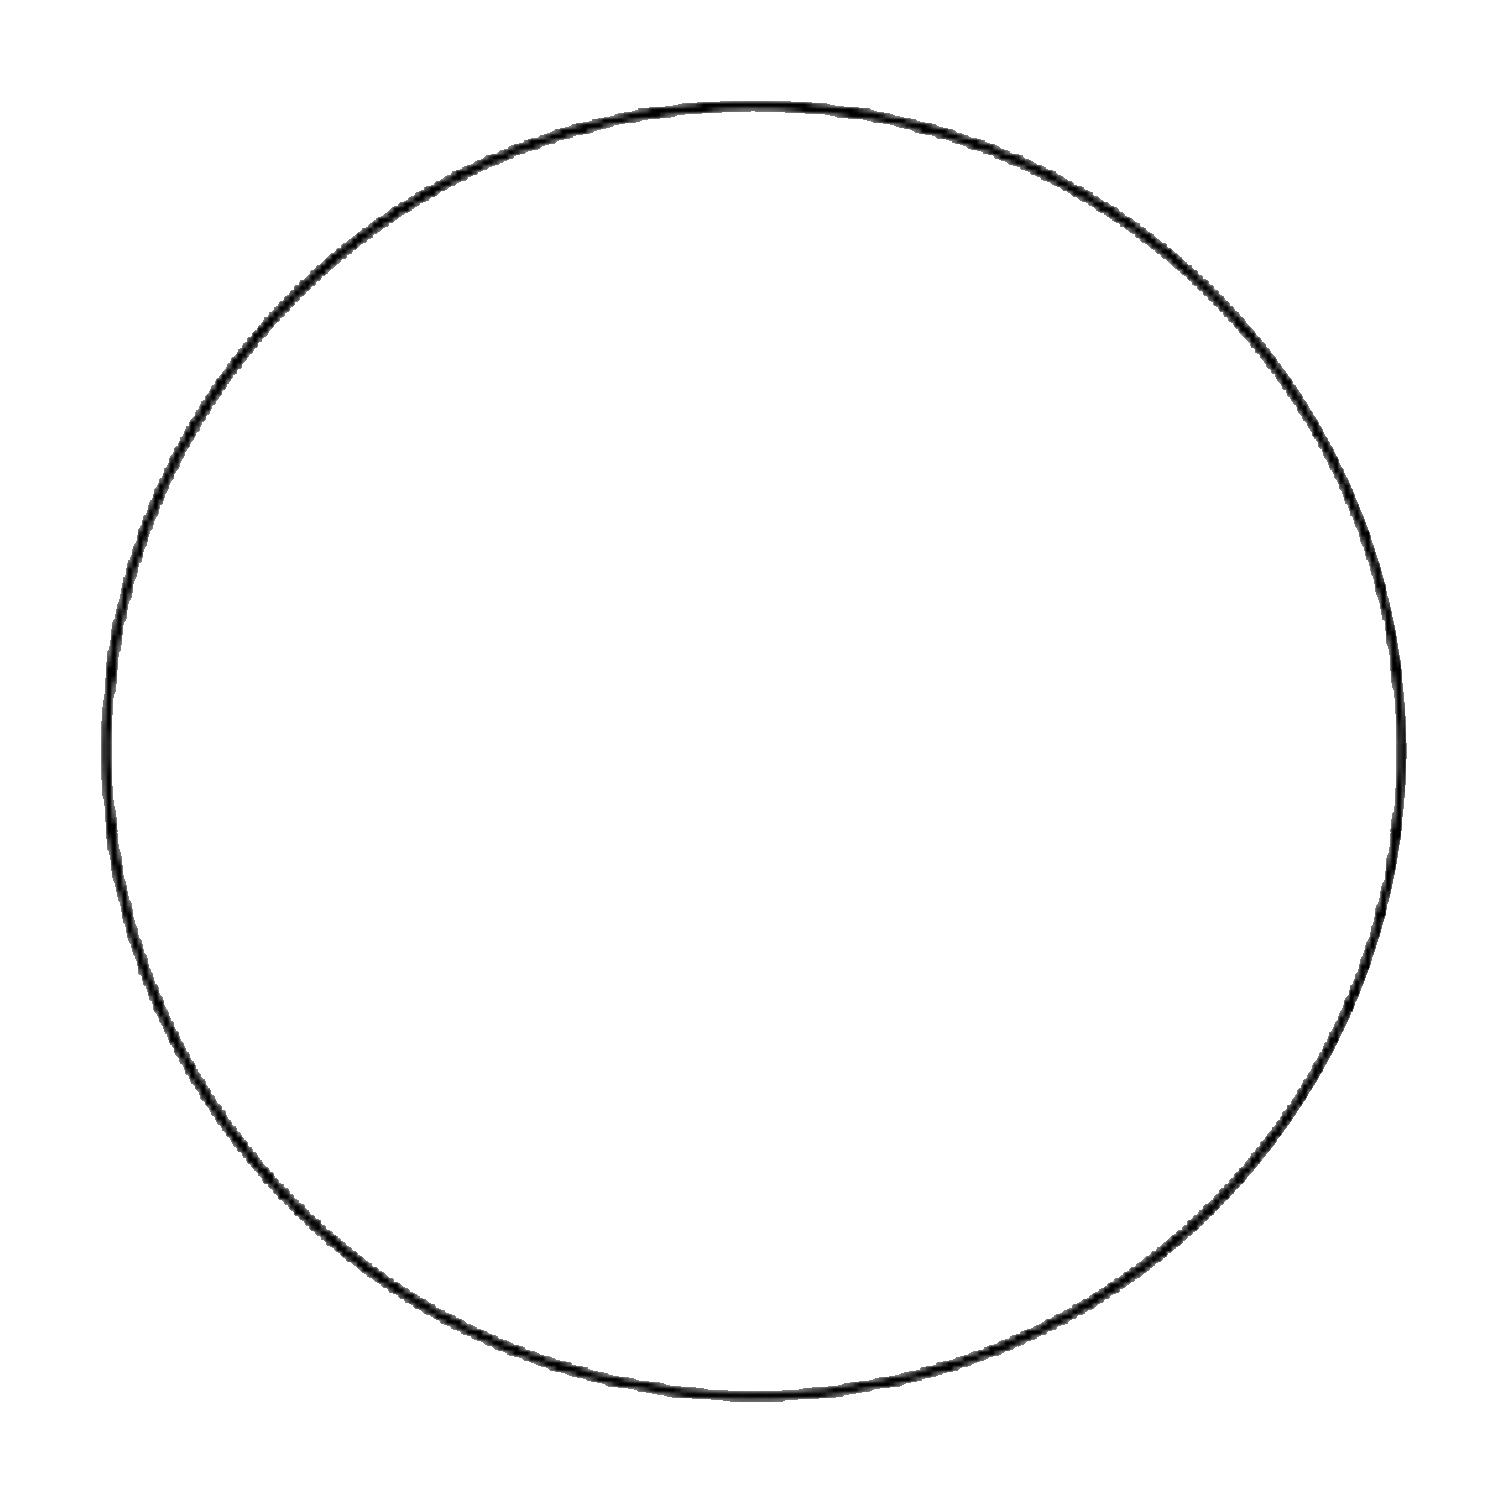 Диаметр круга 14 см. Трафарет круги. Круг для вырезания. Трафарет кругов разного размера. Кружок для вырезания.